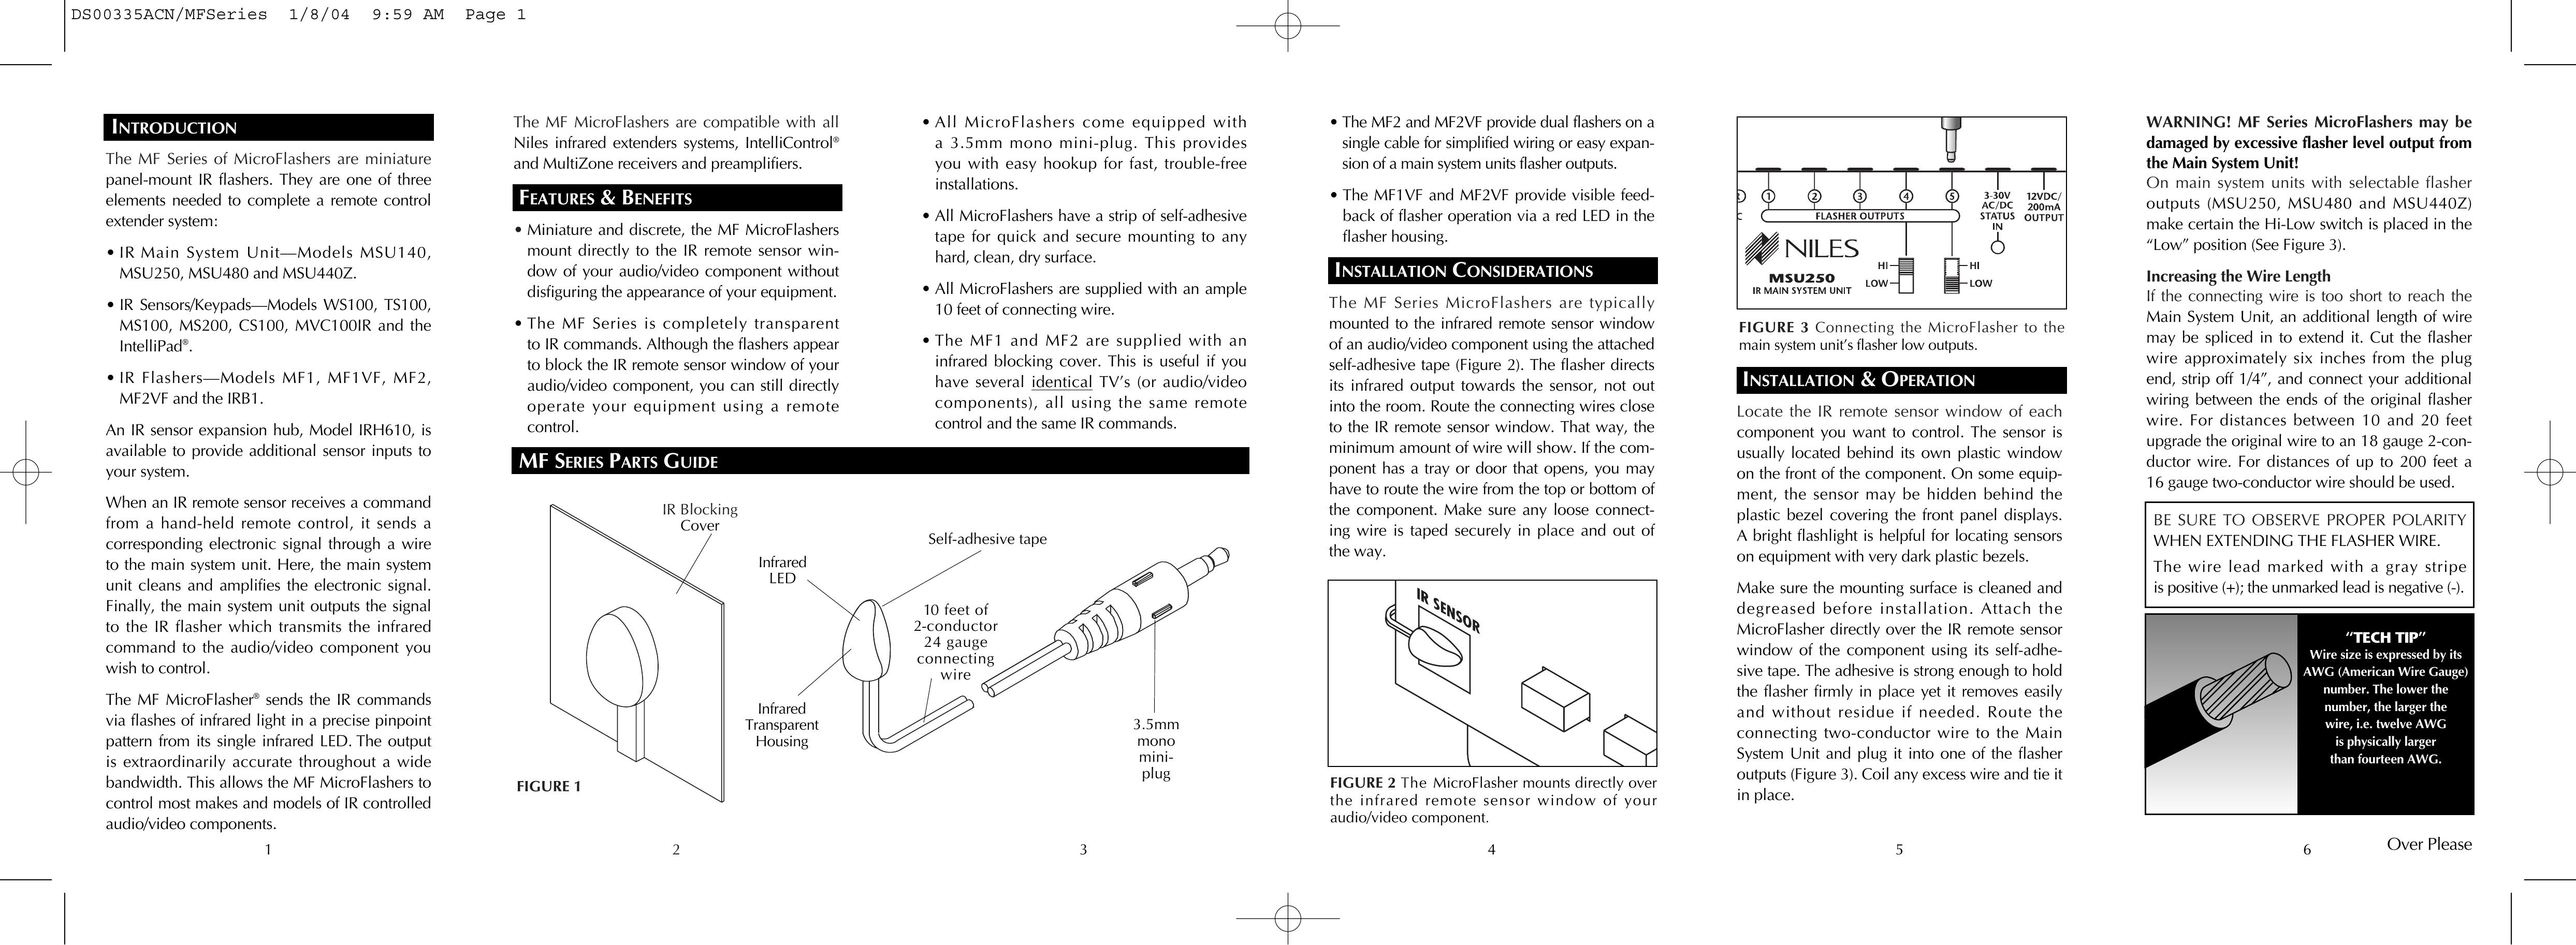 Niles Audio IRB1 Microscope & Magnifier User Manual